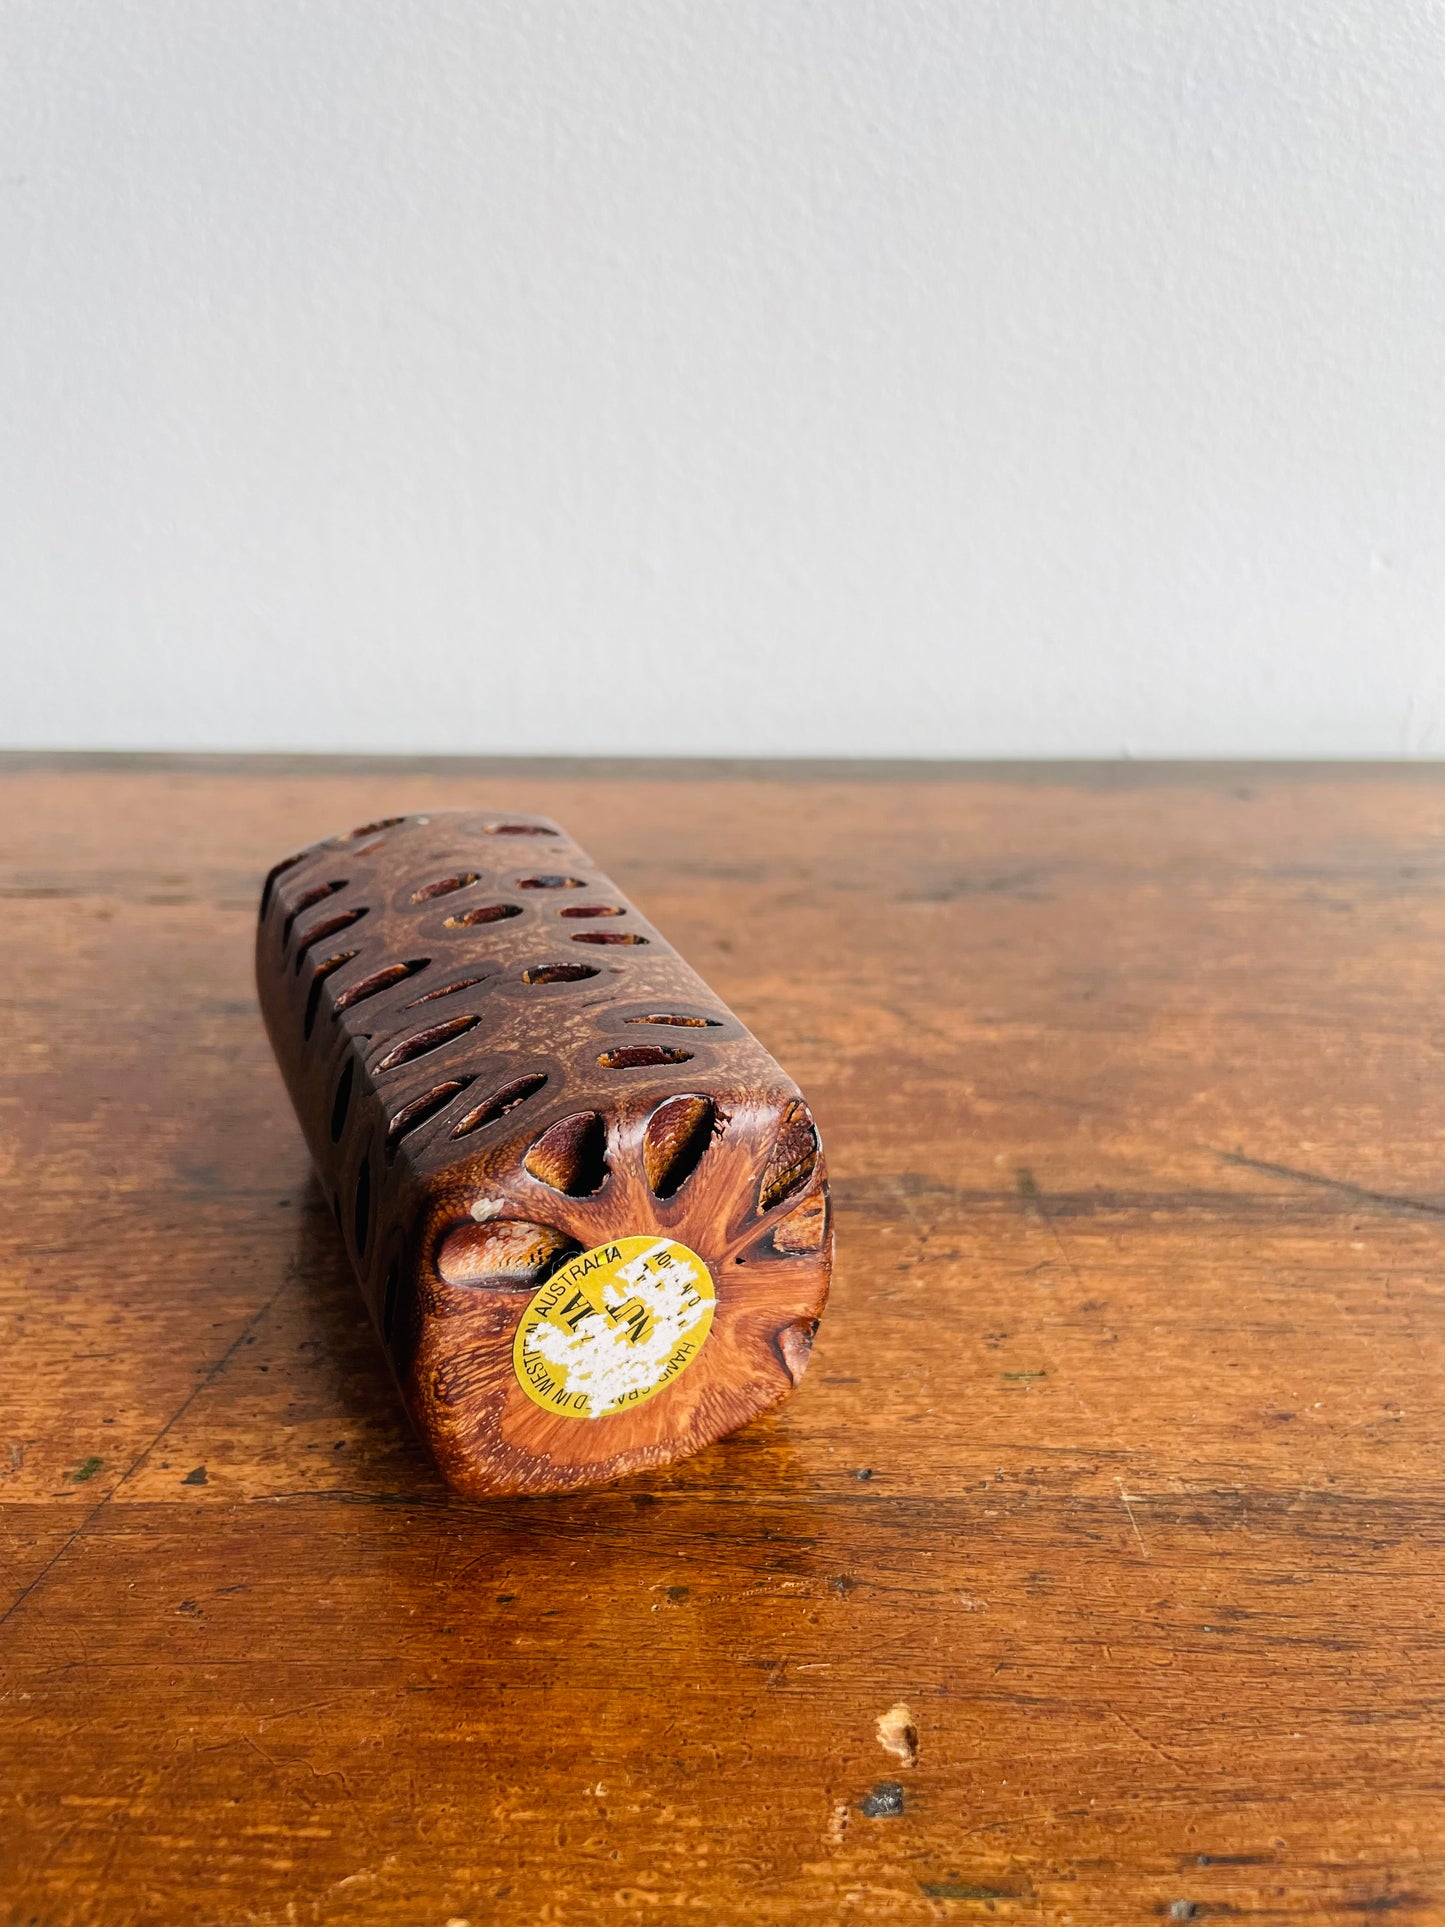 Banksia Nut Pod Wooden Vase - Hand Crafted in Western Australia